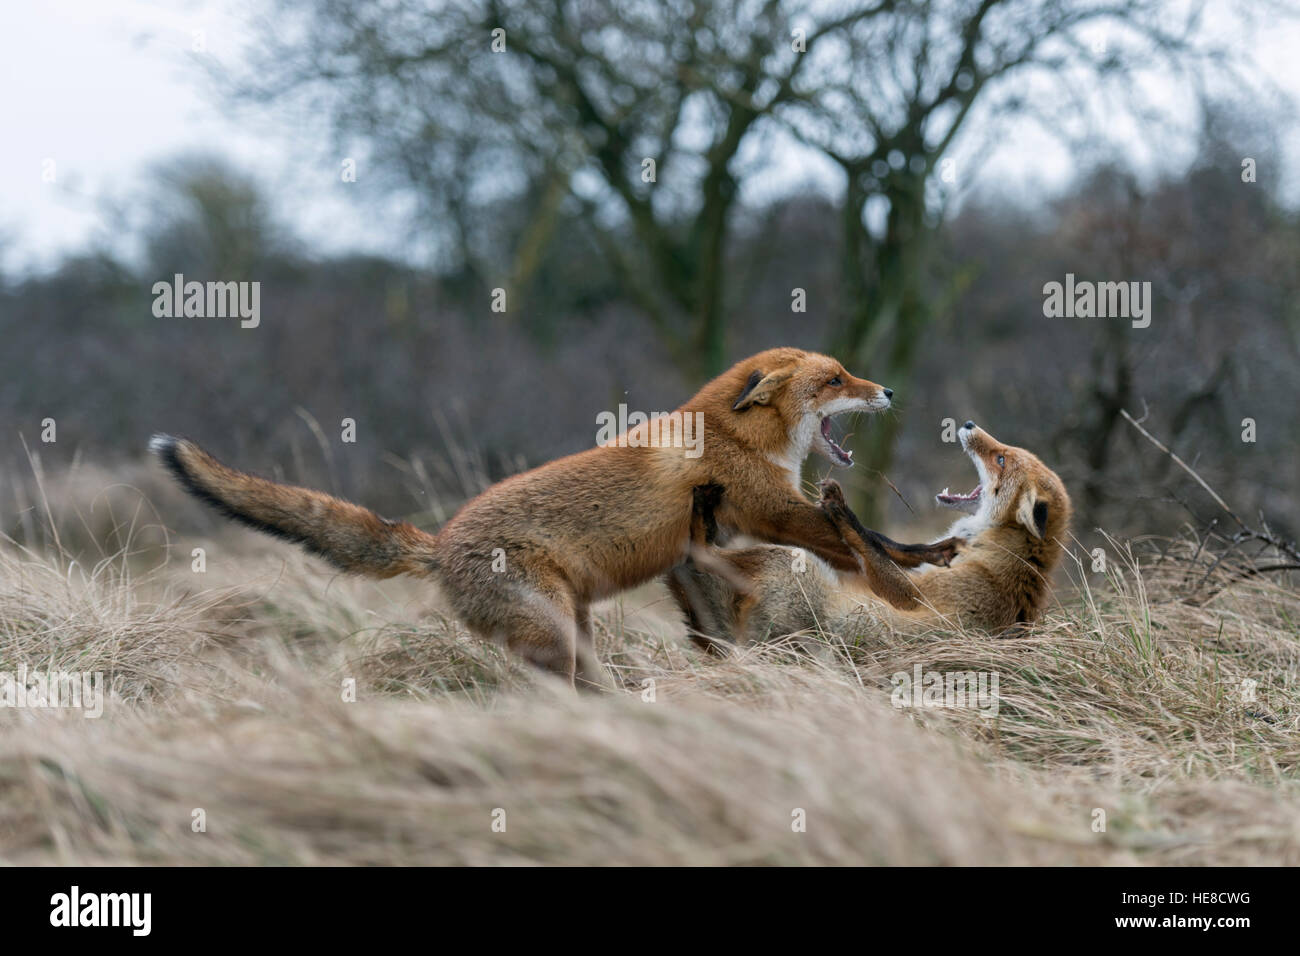 Red Fox / Rotfuchs ( Vulpes vulpes ) in fight, fighting during their rutting season, territorial behaviour, wildlife Europe. Stock Photo